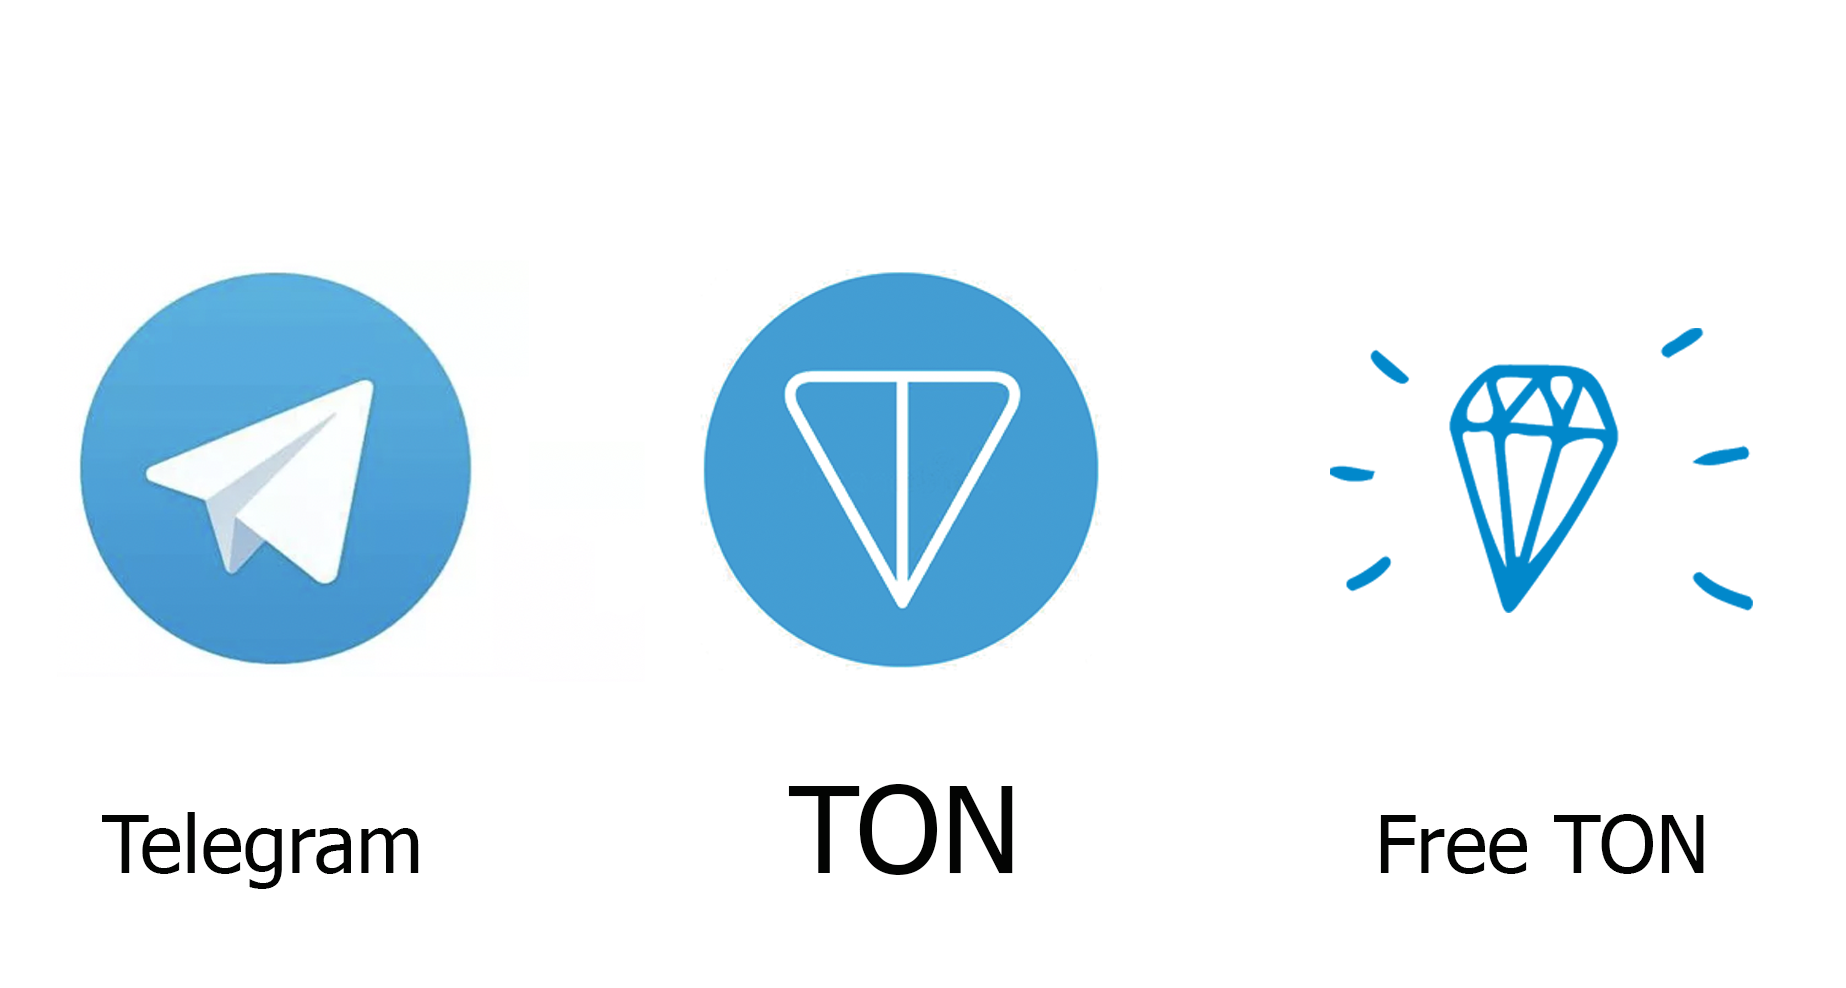 The open network ton. Ton в телеграмме. Ton логотип. Платформа телеграм. Telegram open Network ton.